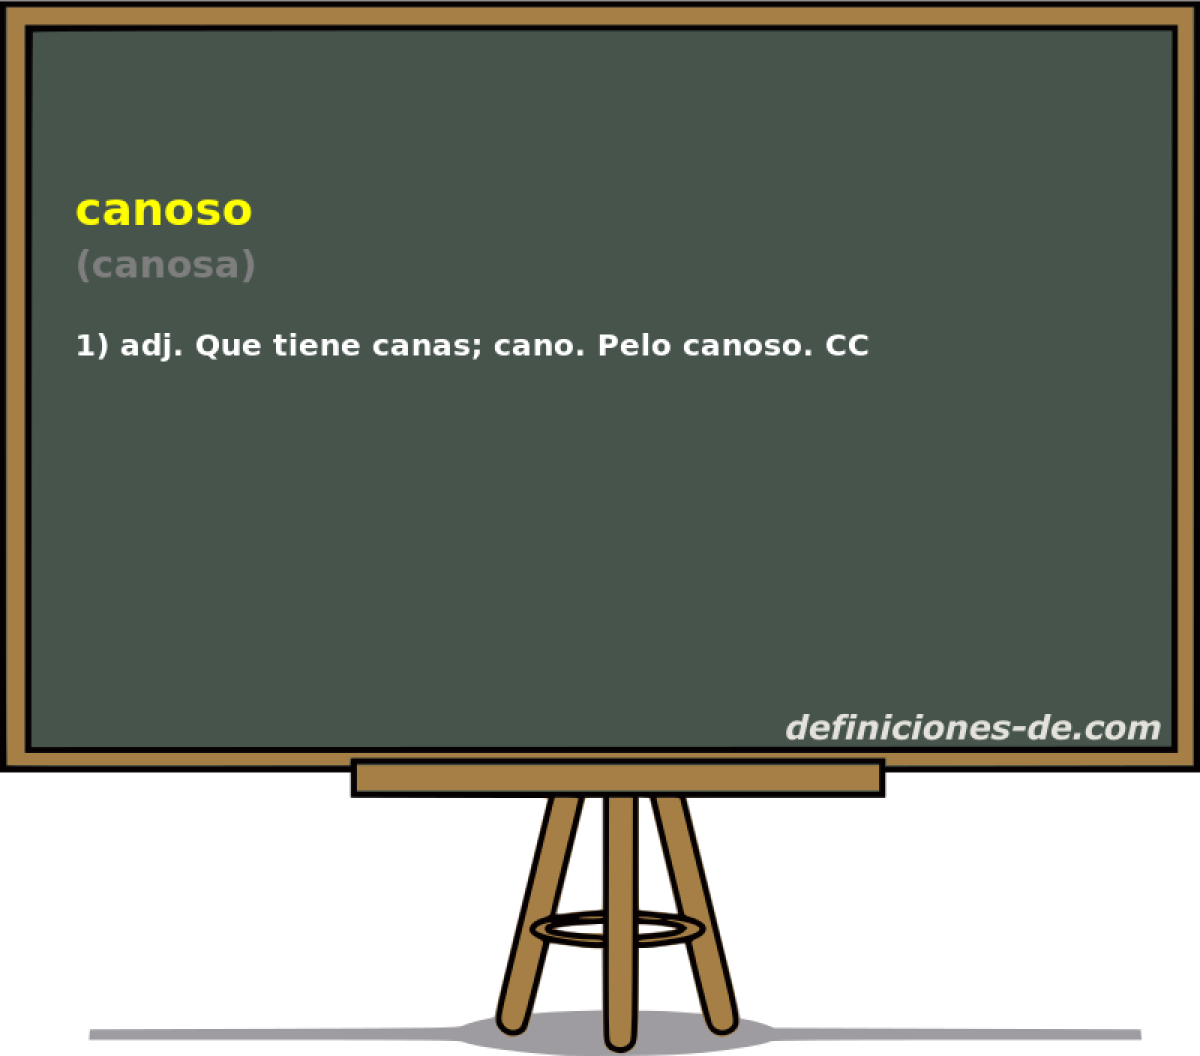 canoso (canosa)